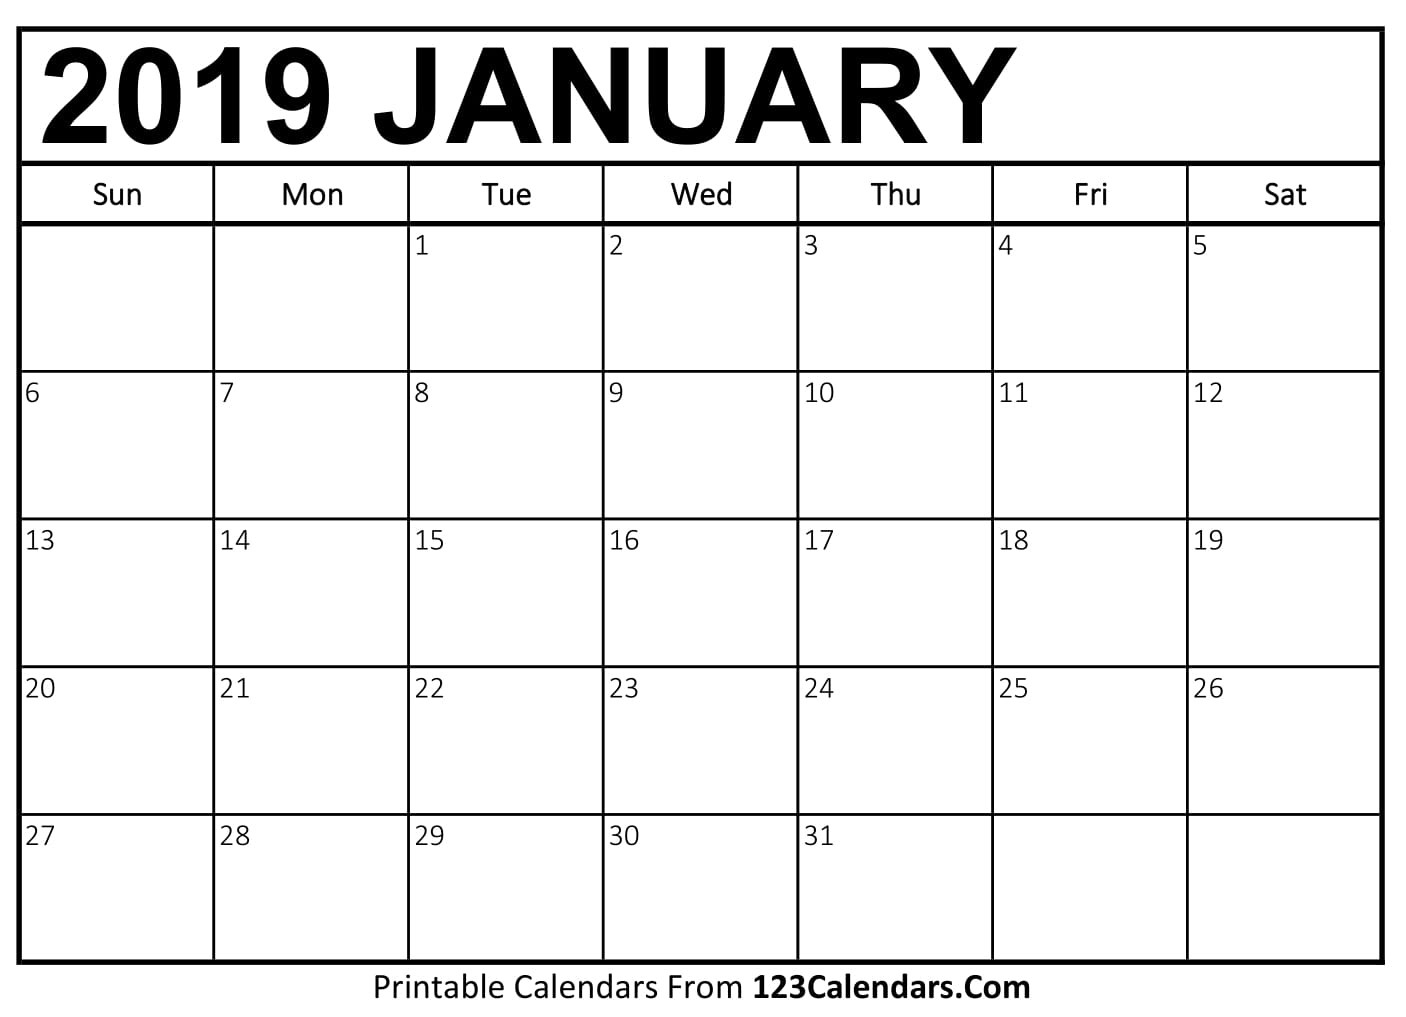 Free Printable Calendar | 123Calendars-Legal Size Calendar Template 2020